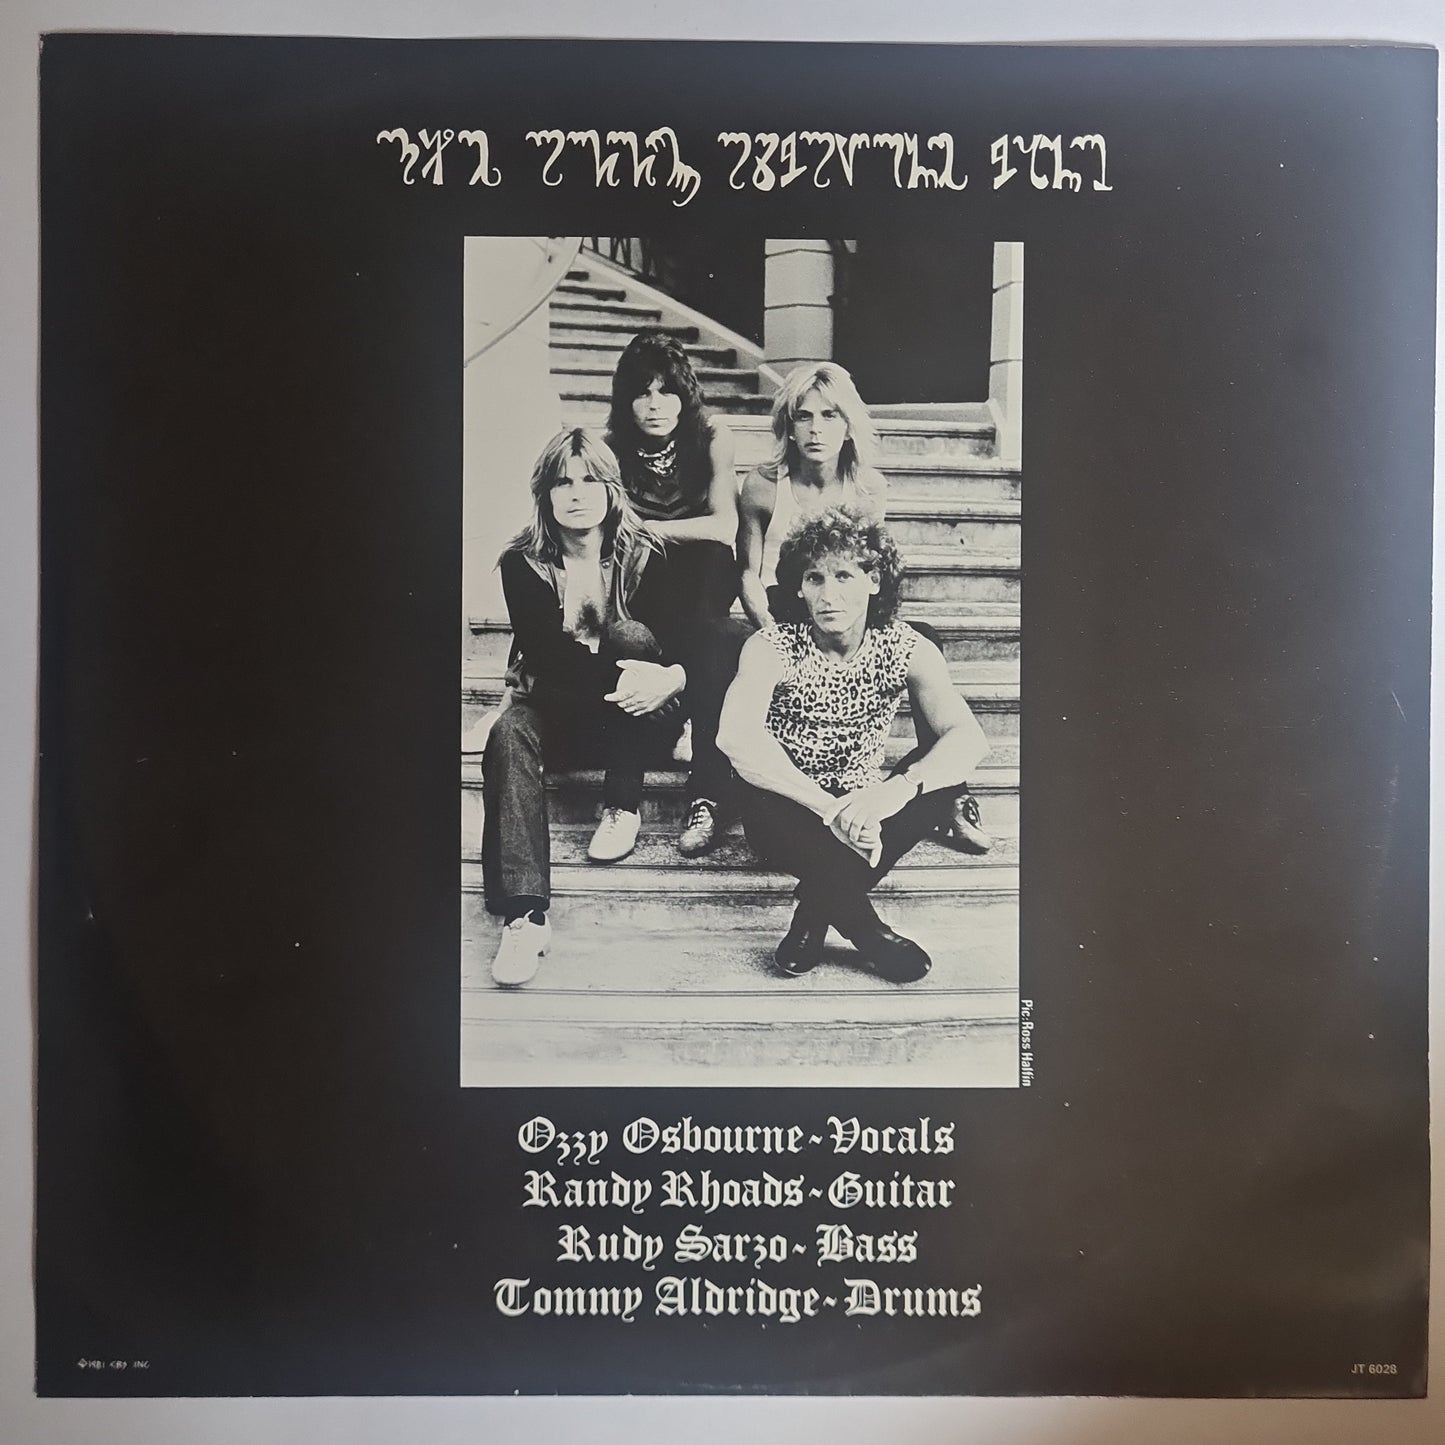 Ozzy Osbourne – Diary Of A Madman - 1981 - Vinyl Record